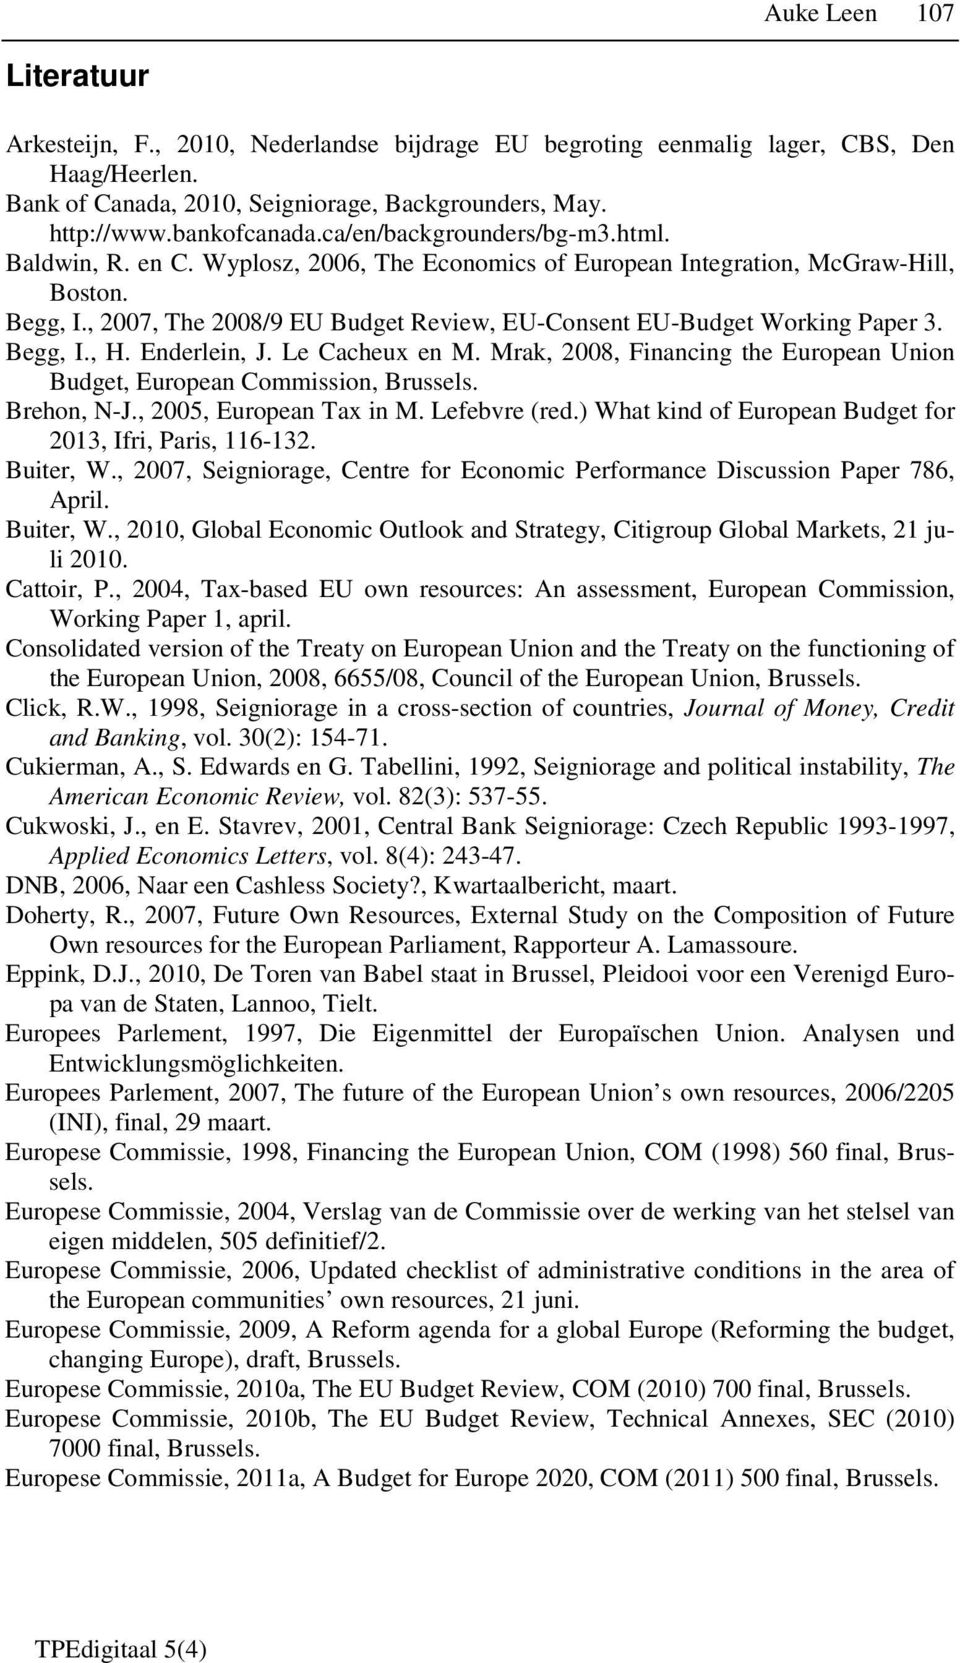 , 2007, The 2008/9 EU Budget Review, EU-Consent EU-Budget Working Paper 3. Begg, I., H. Enderlein, J. Le Cacheux en M. Mrak, 2008, Financing the European Union Budget, European Commission, Brussels.